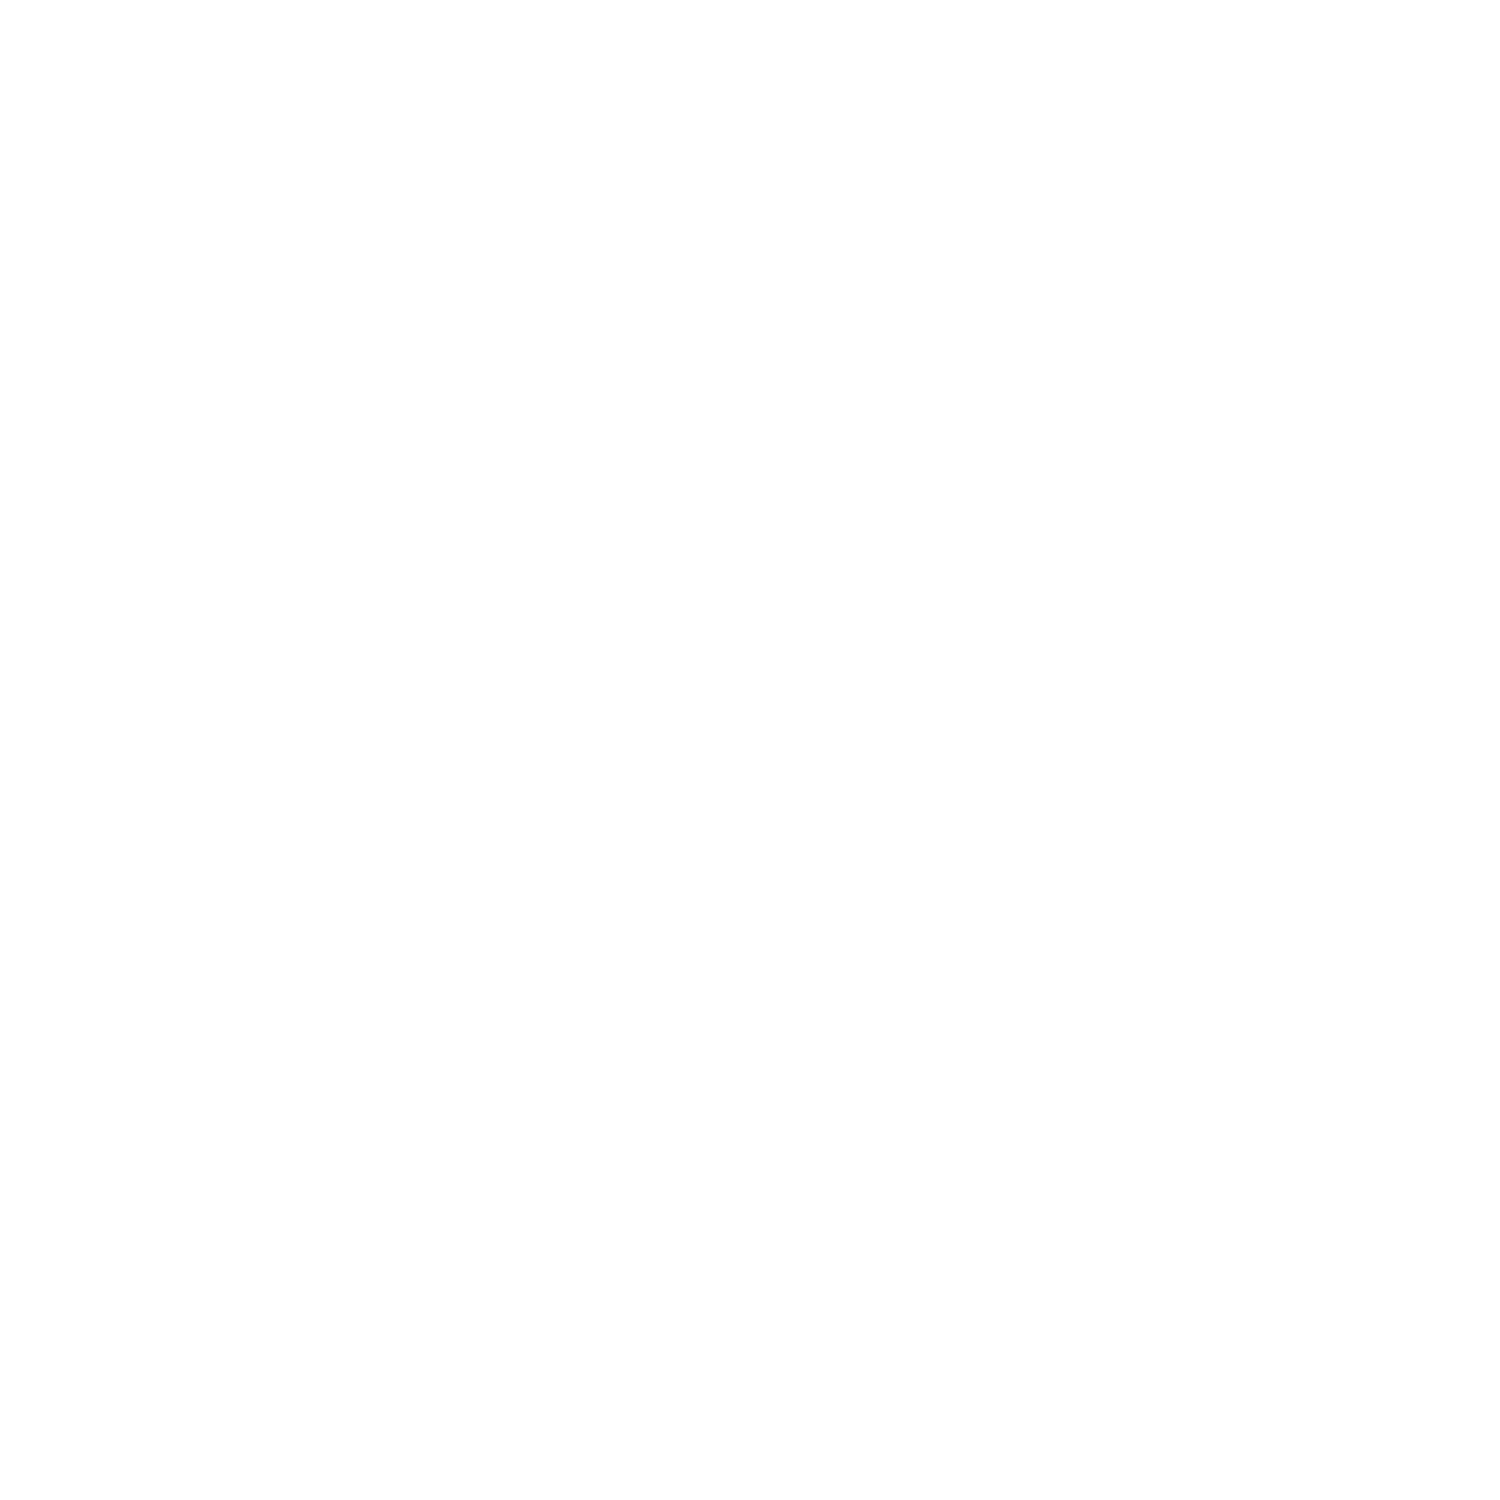 Cecilia May Photography